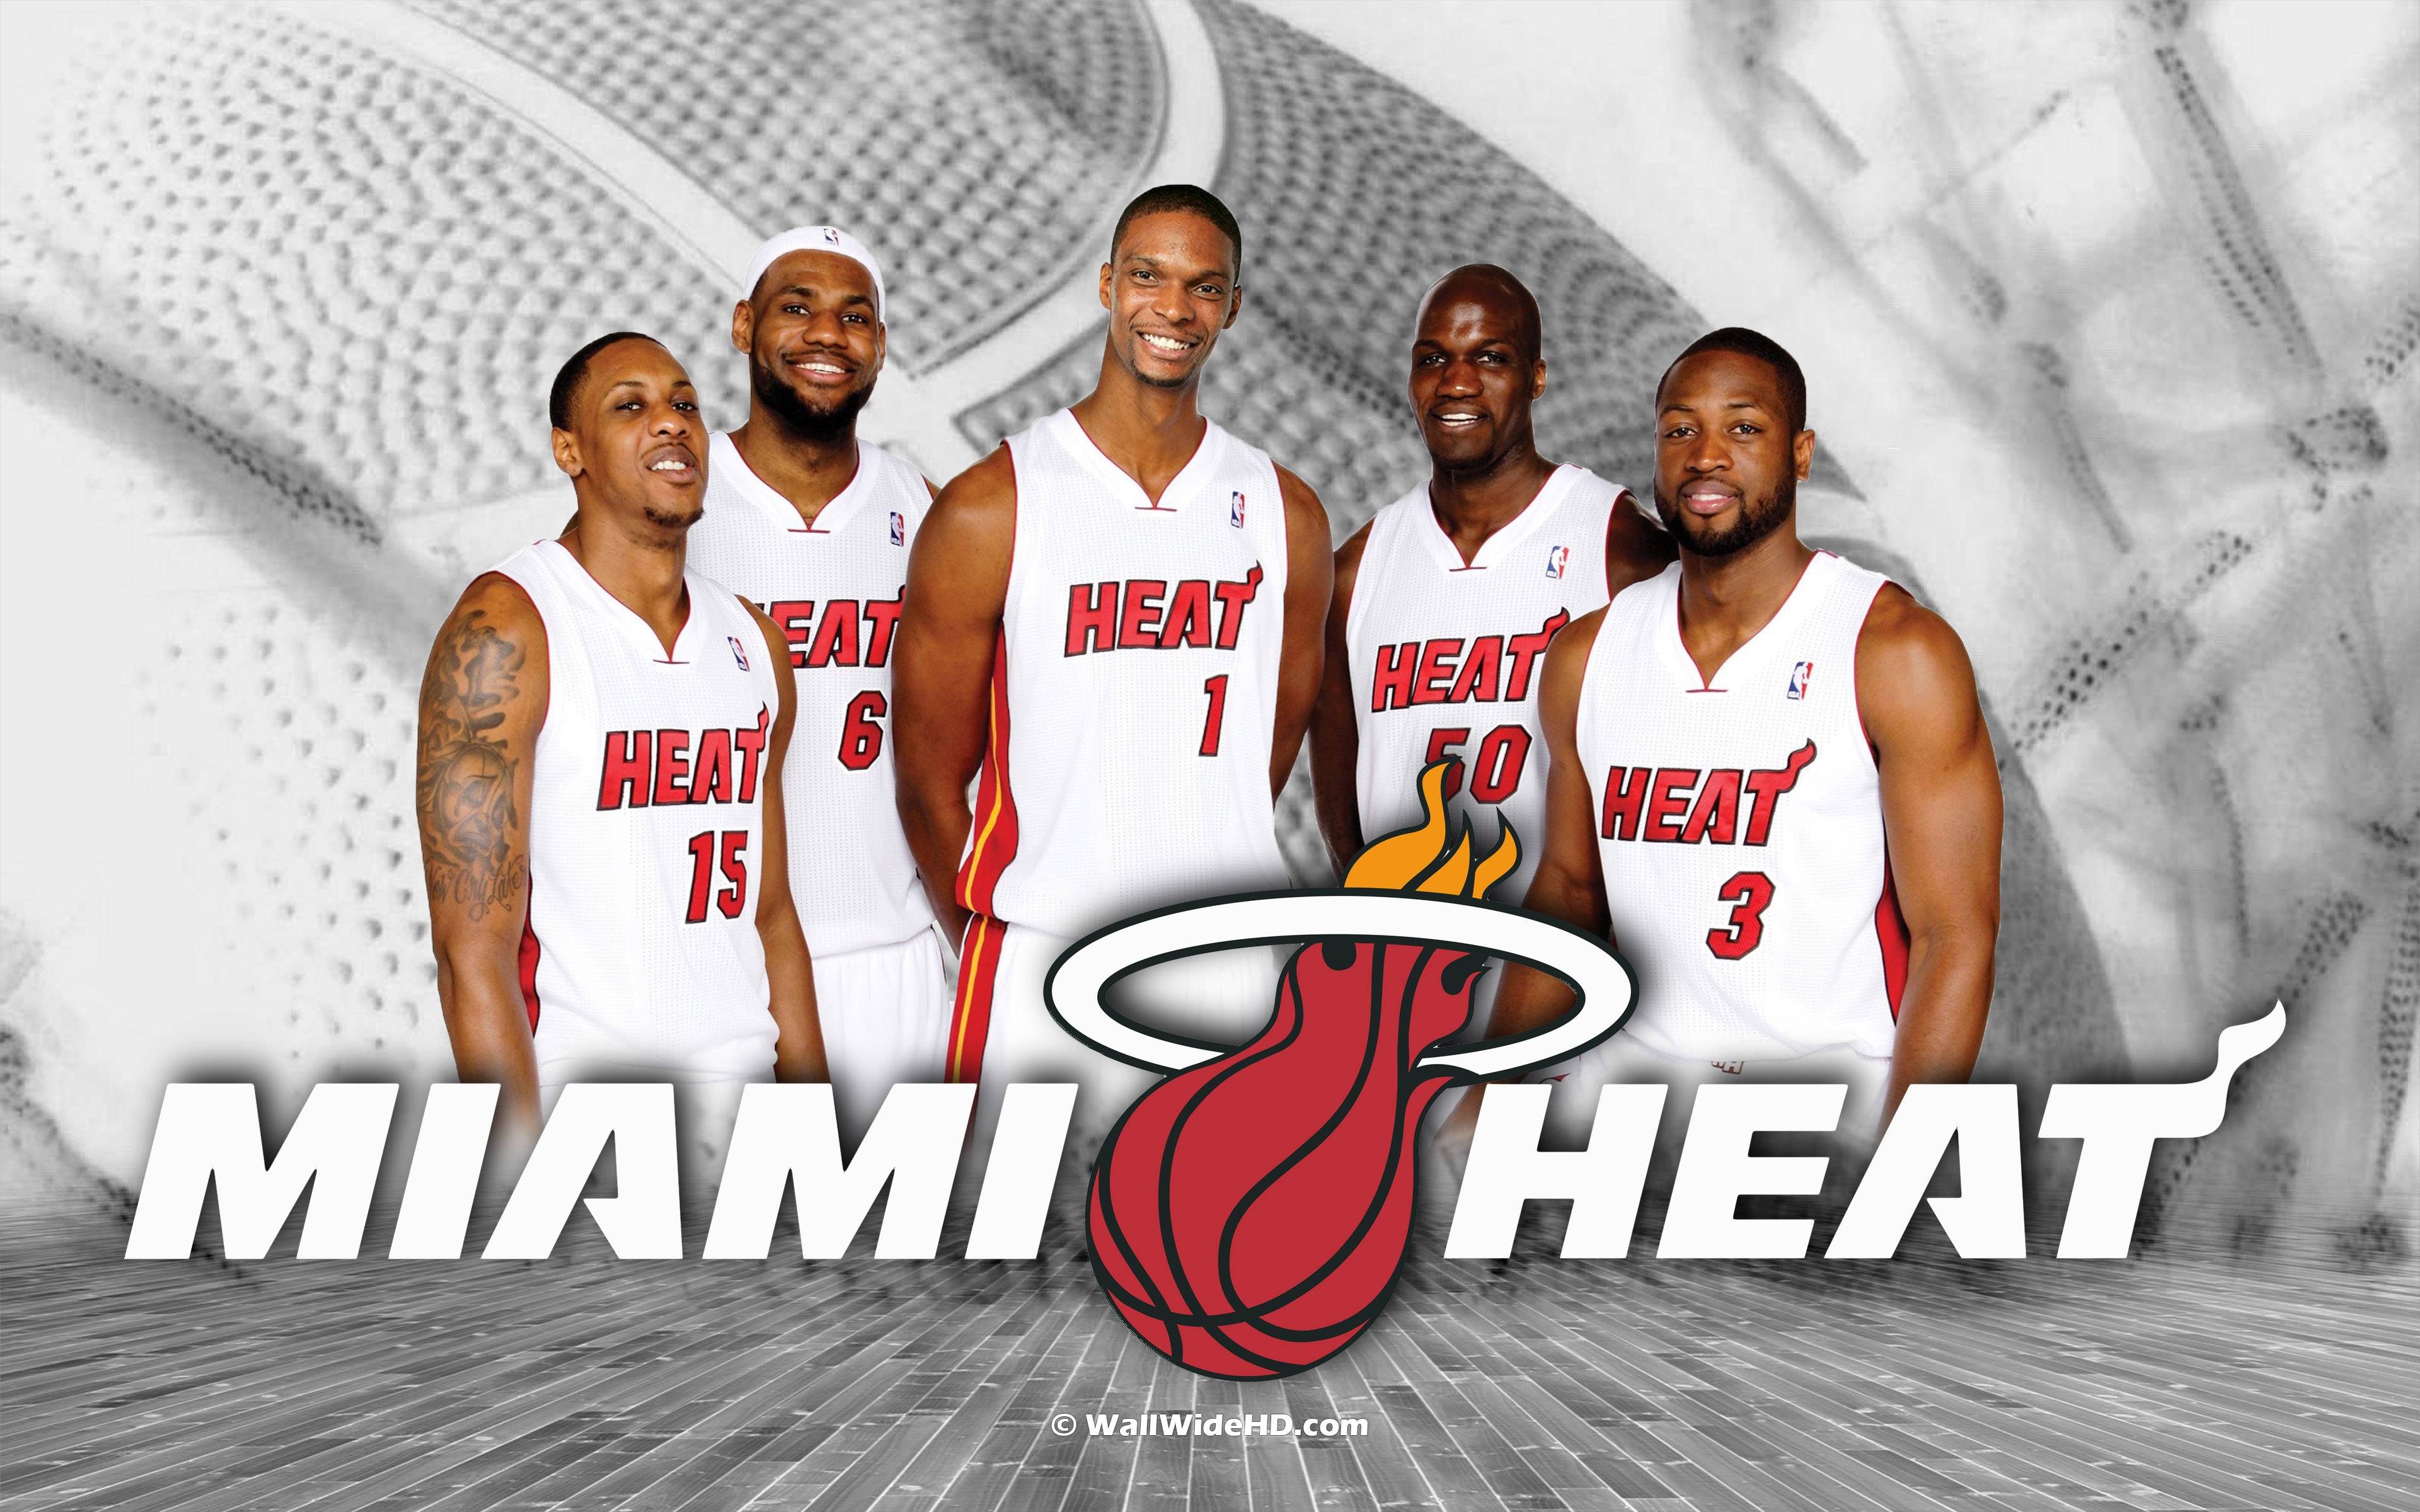 Miami Heat Starting Lineup NBA Wallpaper Wide or HD. Sports